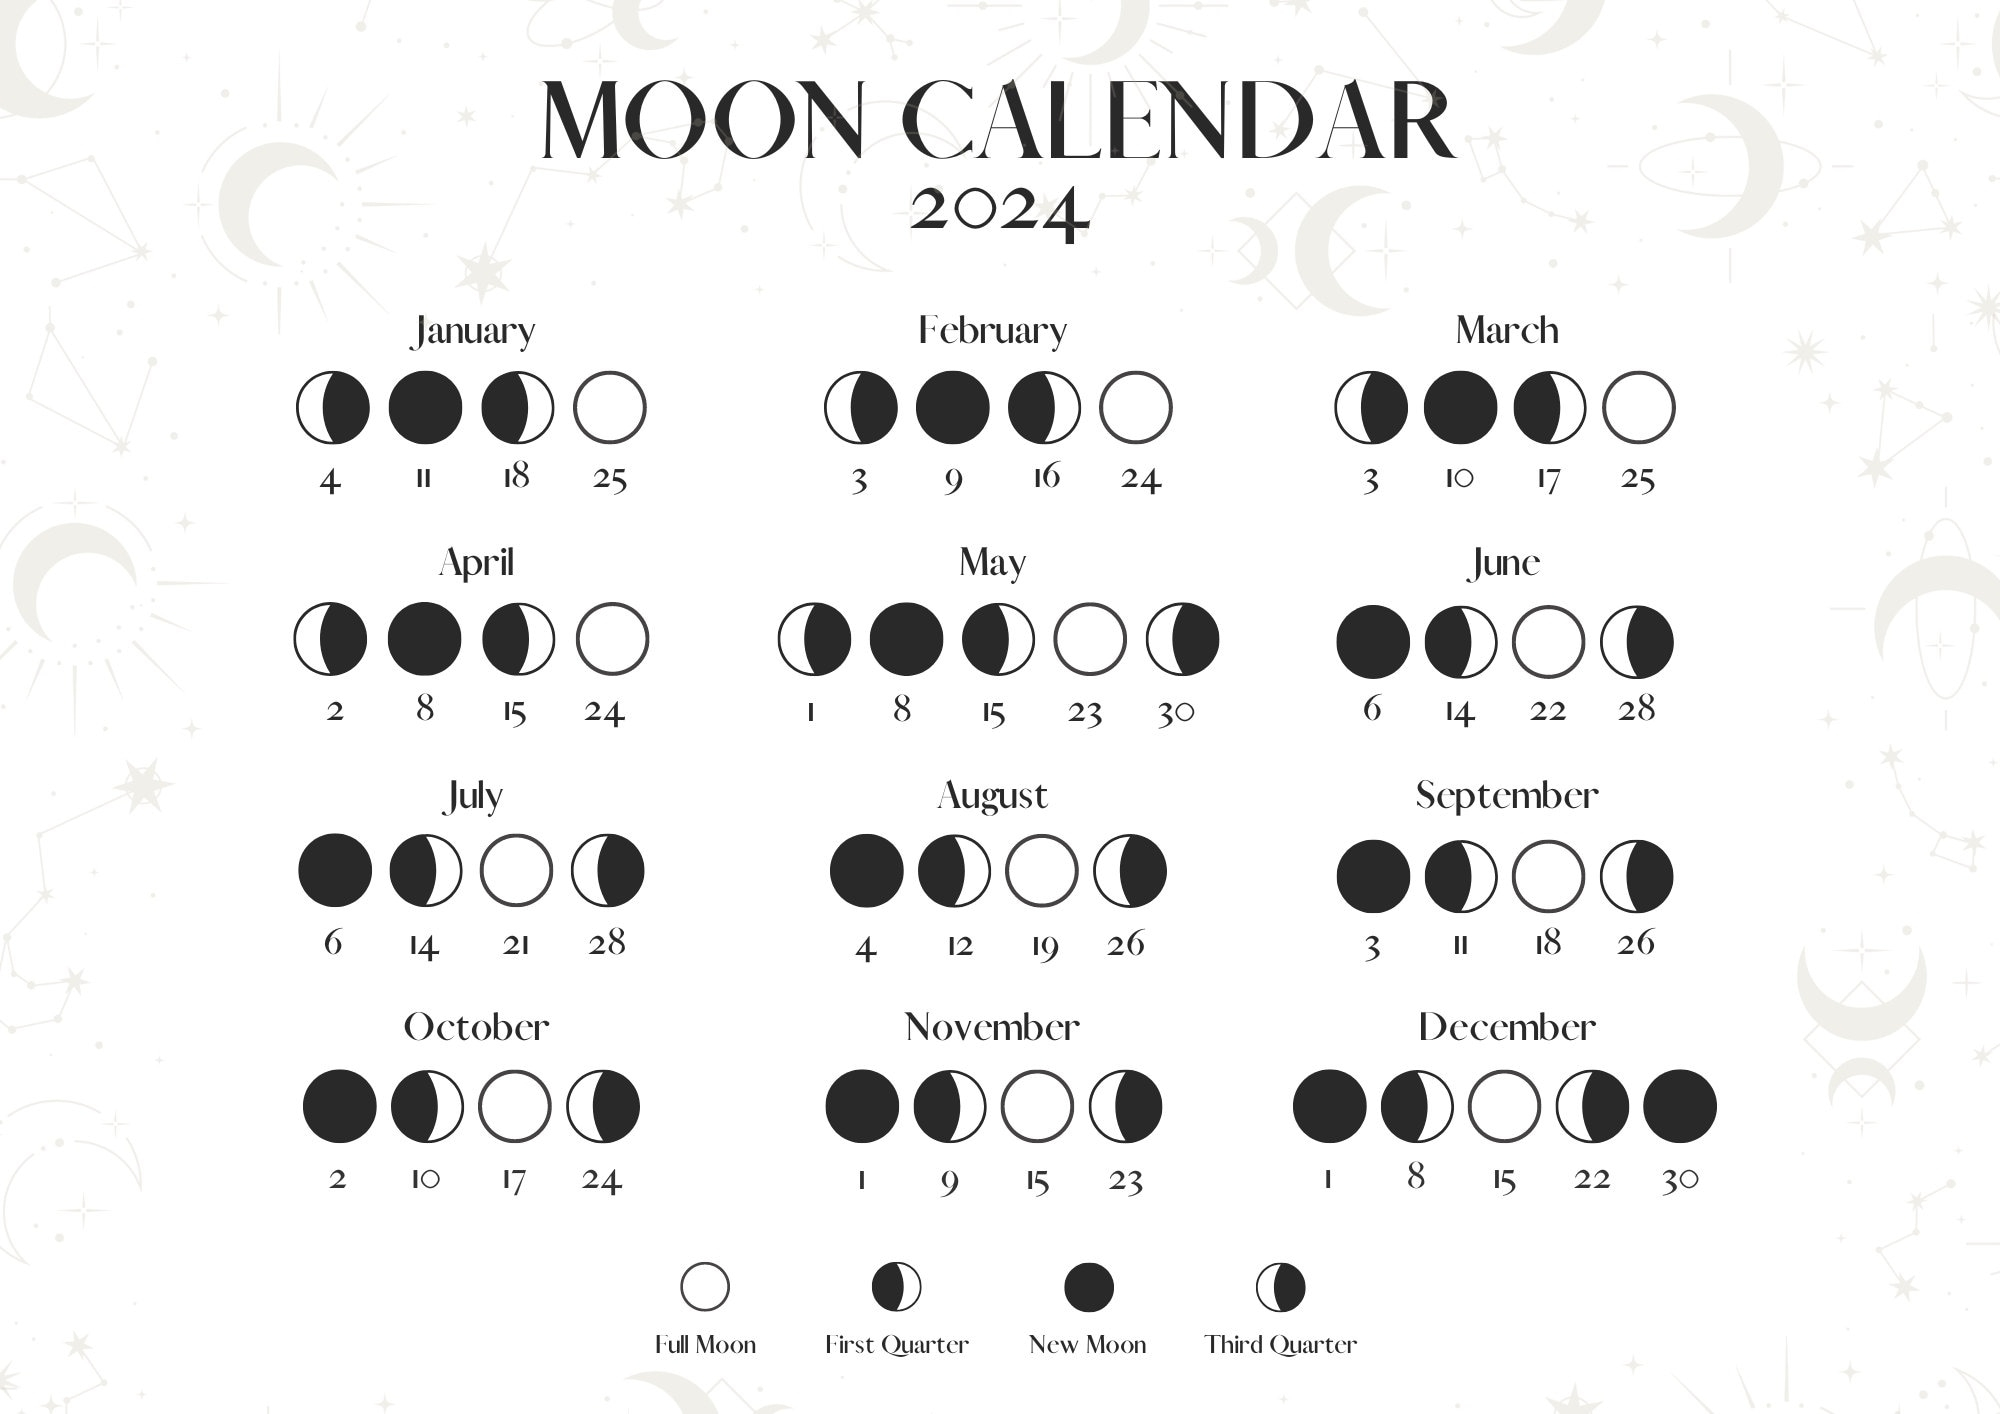 Moon Calendar 2024 Moon Phases Lunar Calendar Printable In A4 - Etsy for Moon Phase Calendar 2024 Printable